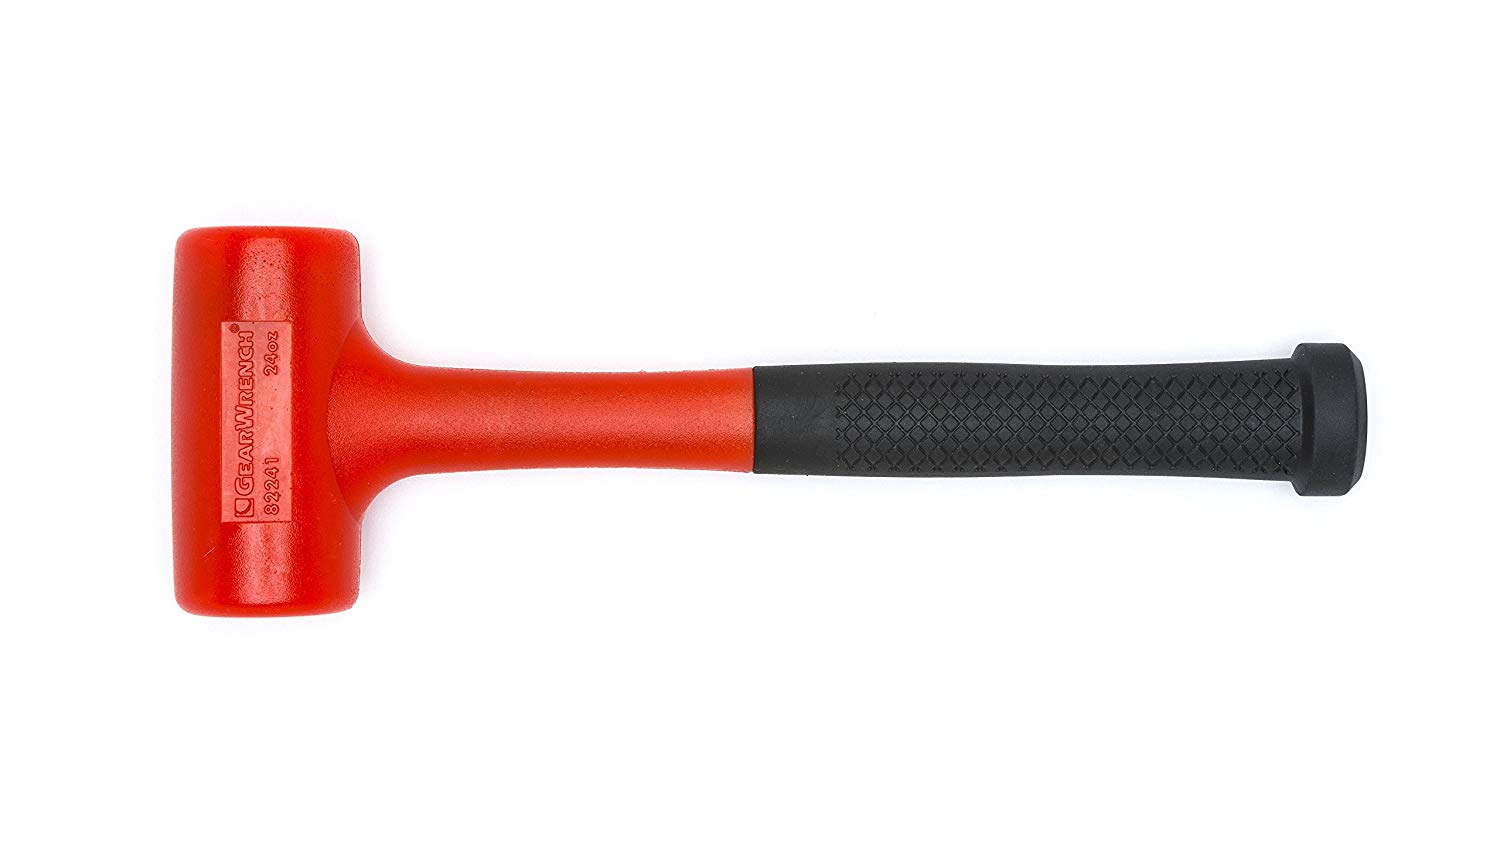 GEARWRENCH 54 oz. Dead Blow Hammer with Polyurethane Head - 82244 - MPR Tools & Equipment